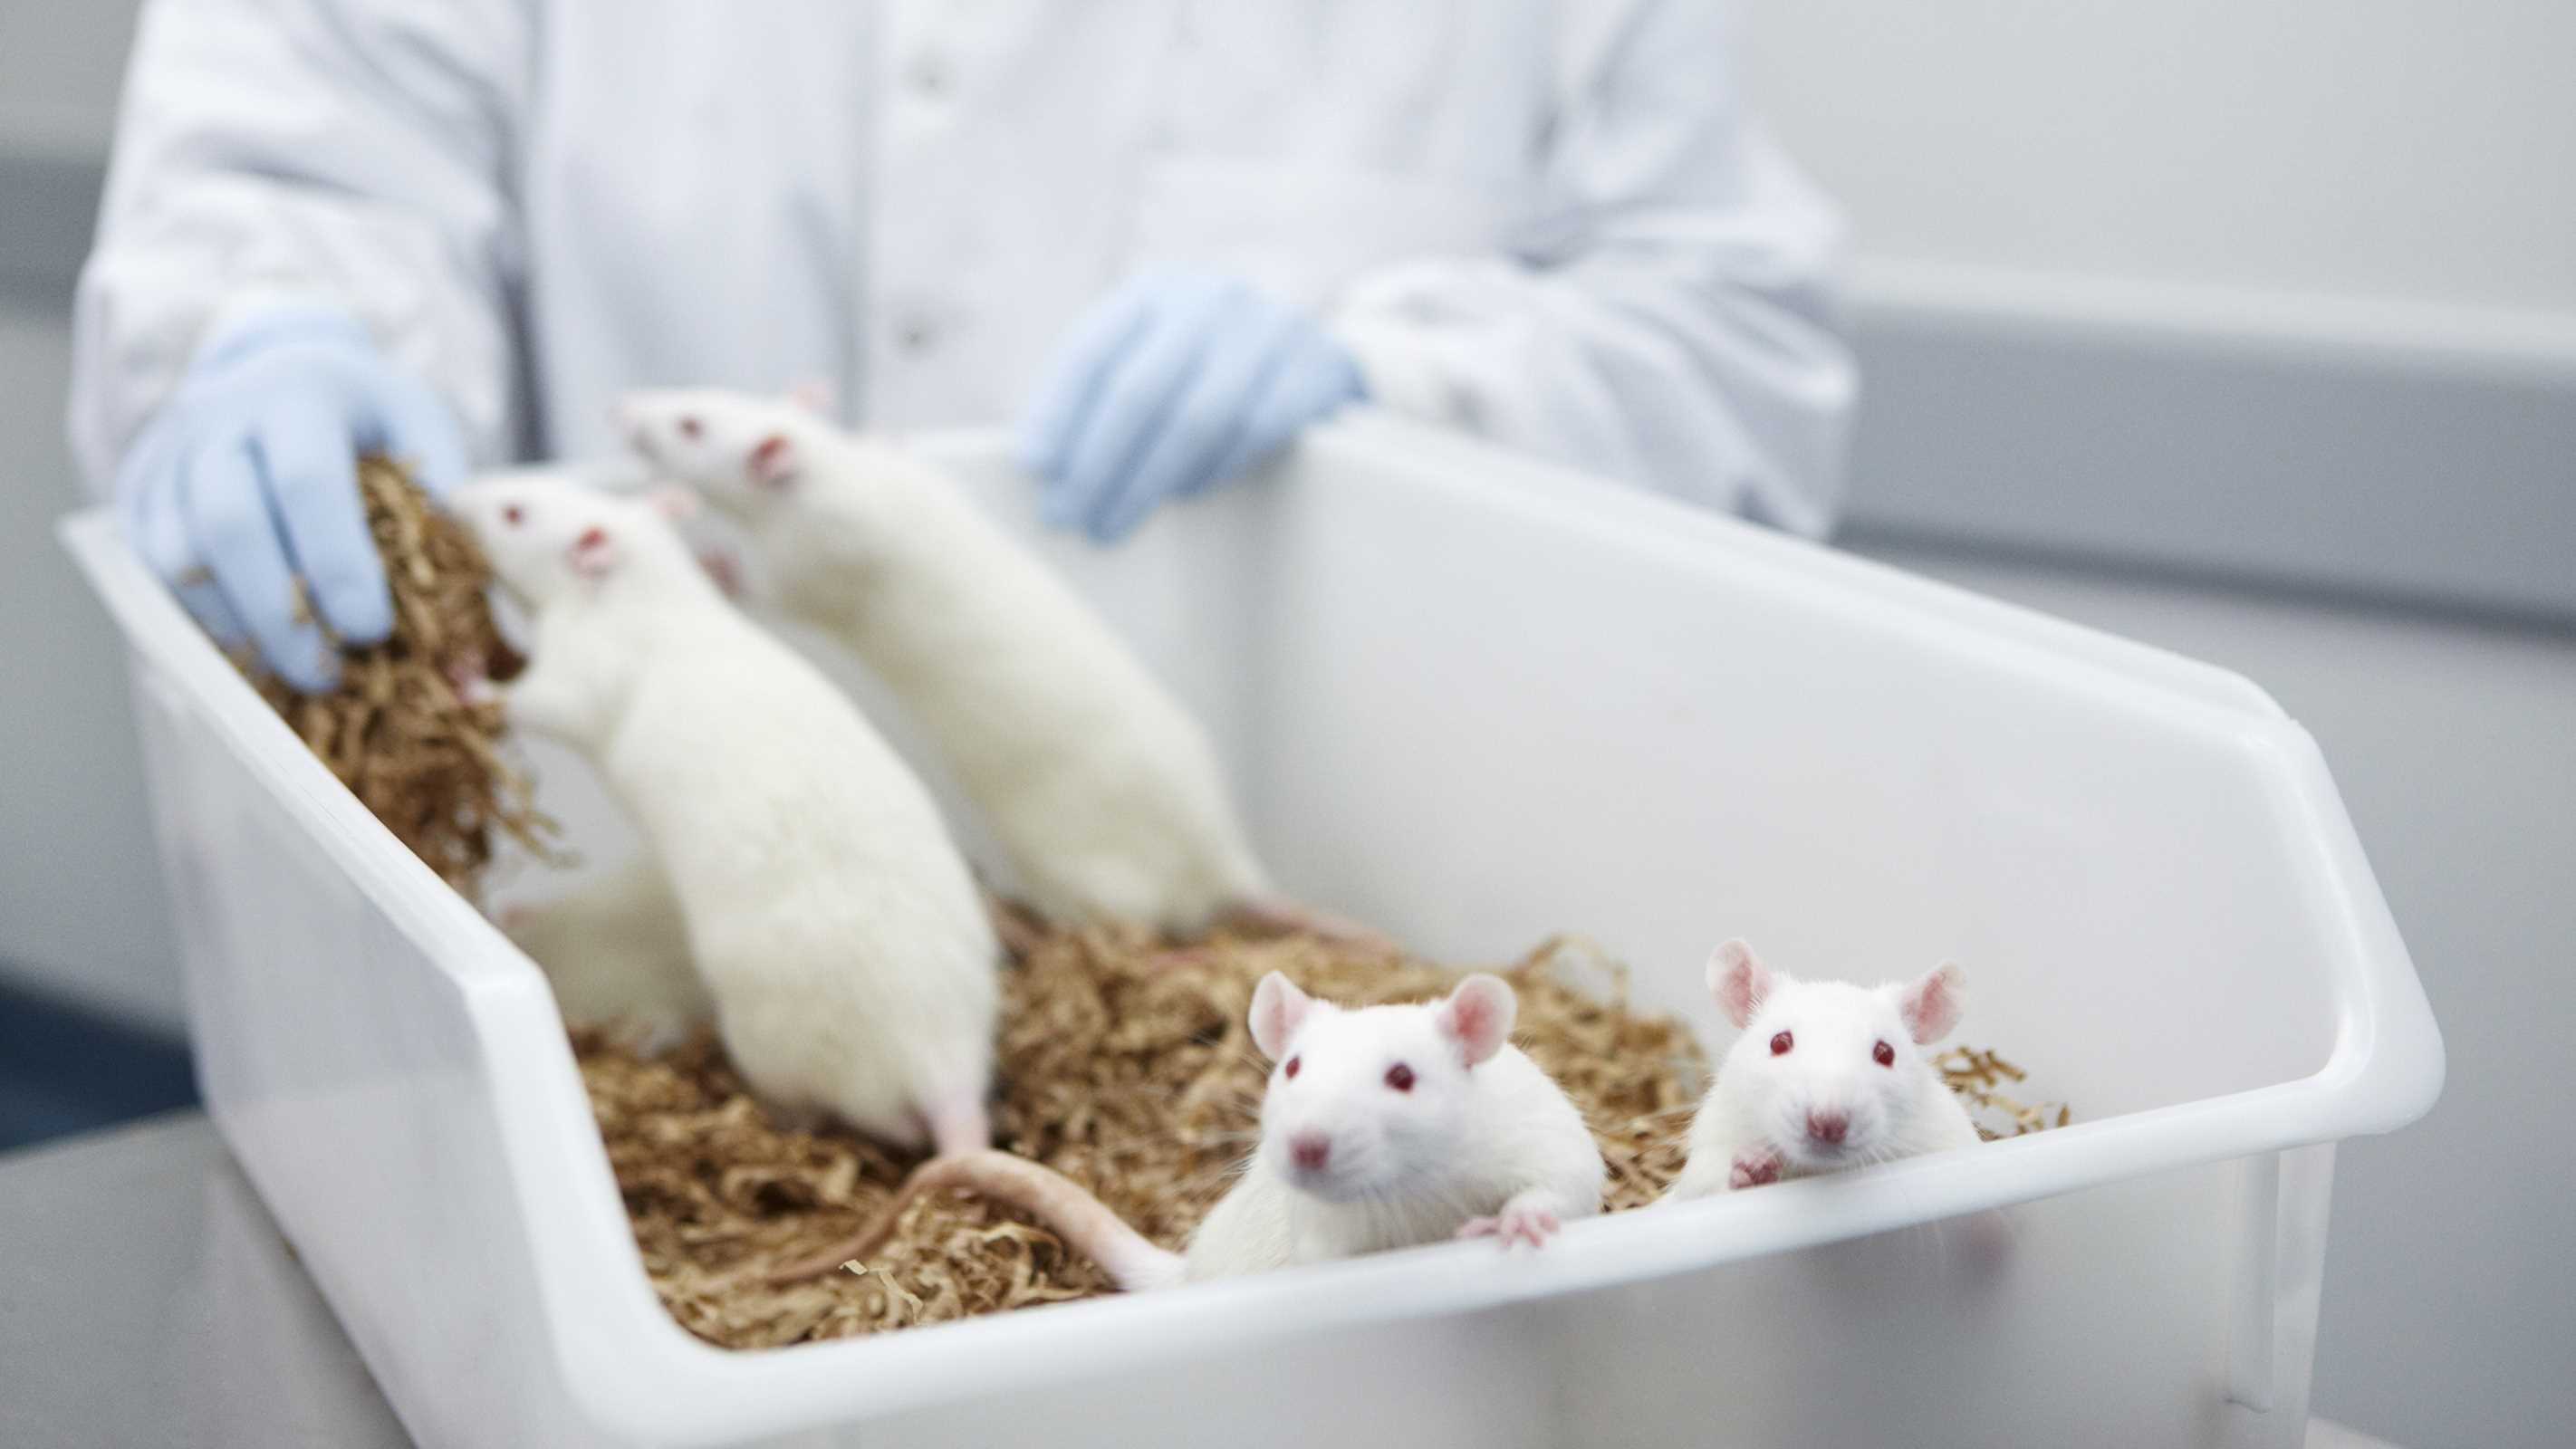 Is animal testing necessary? - netivist